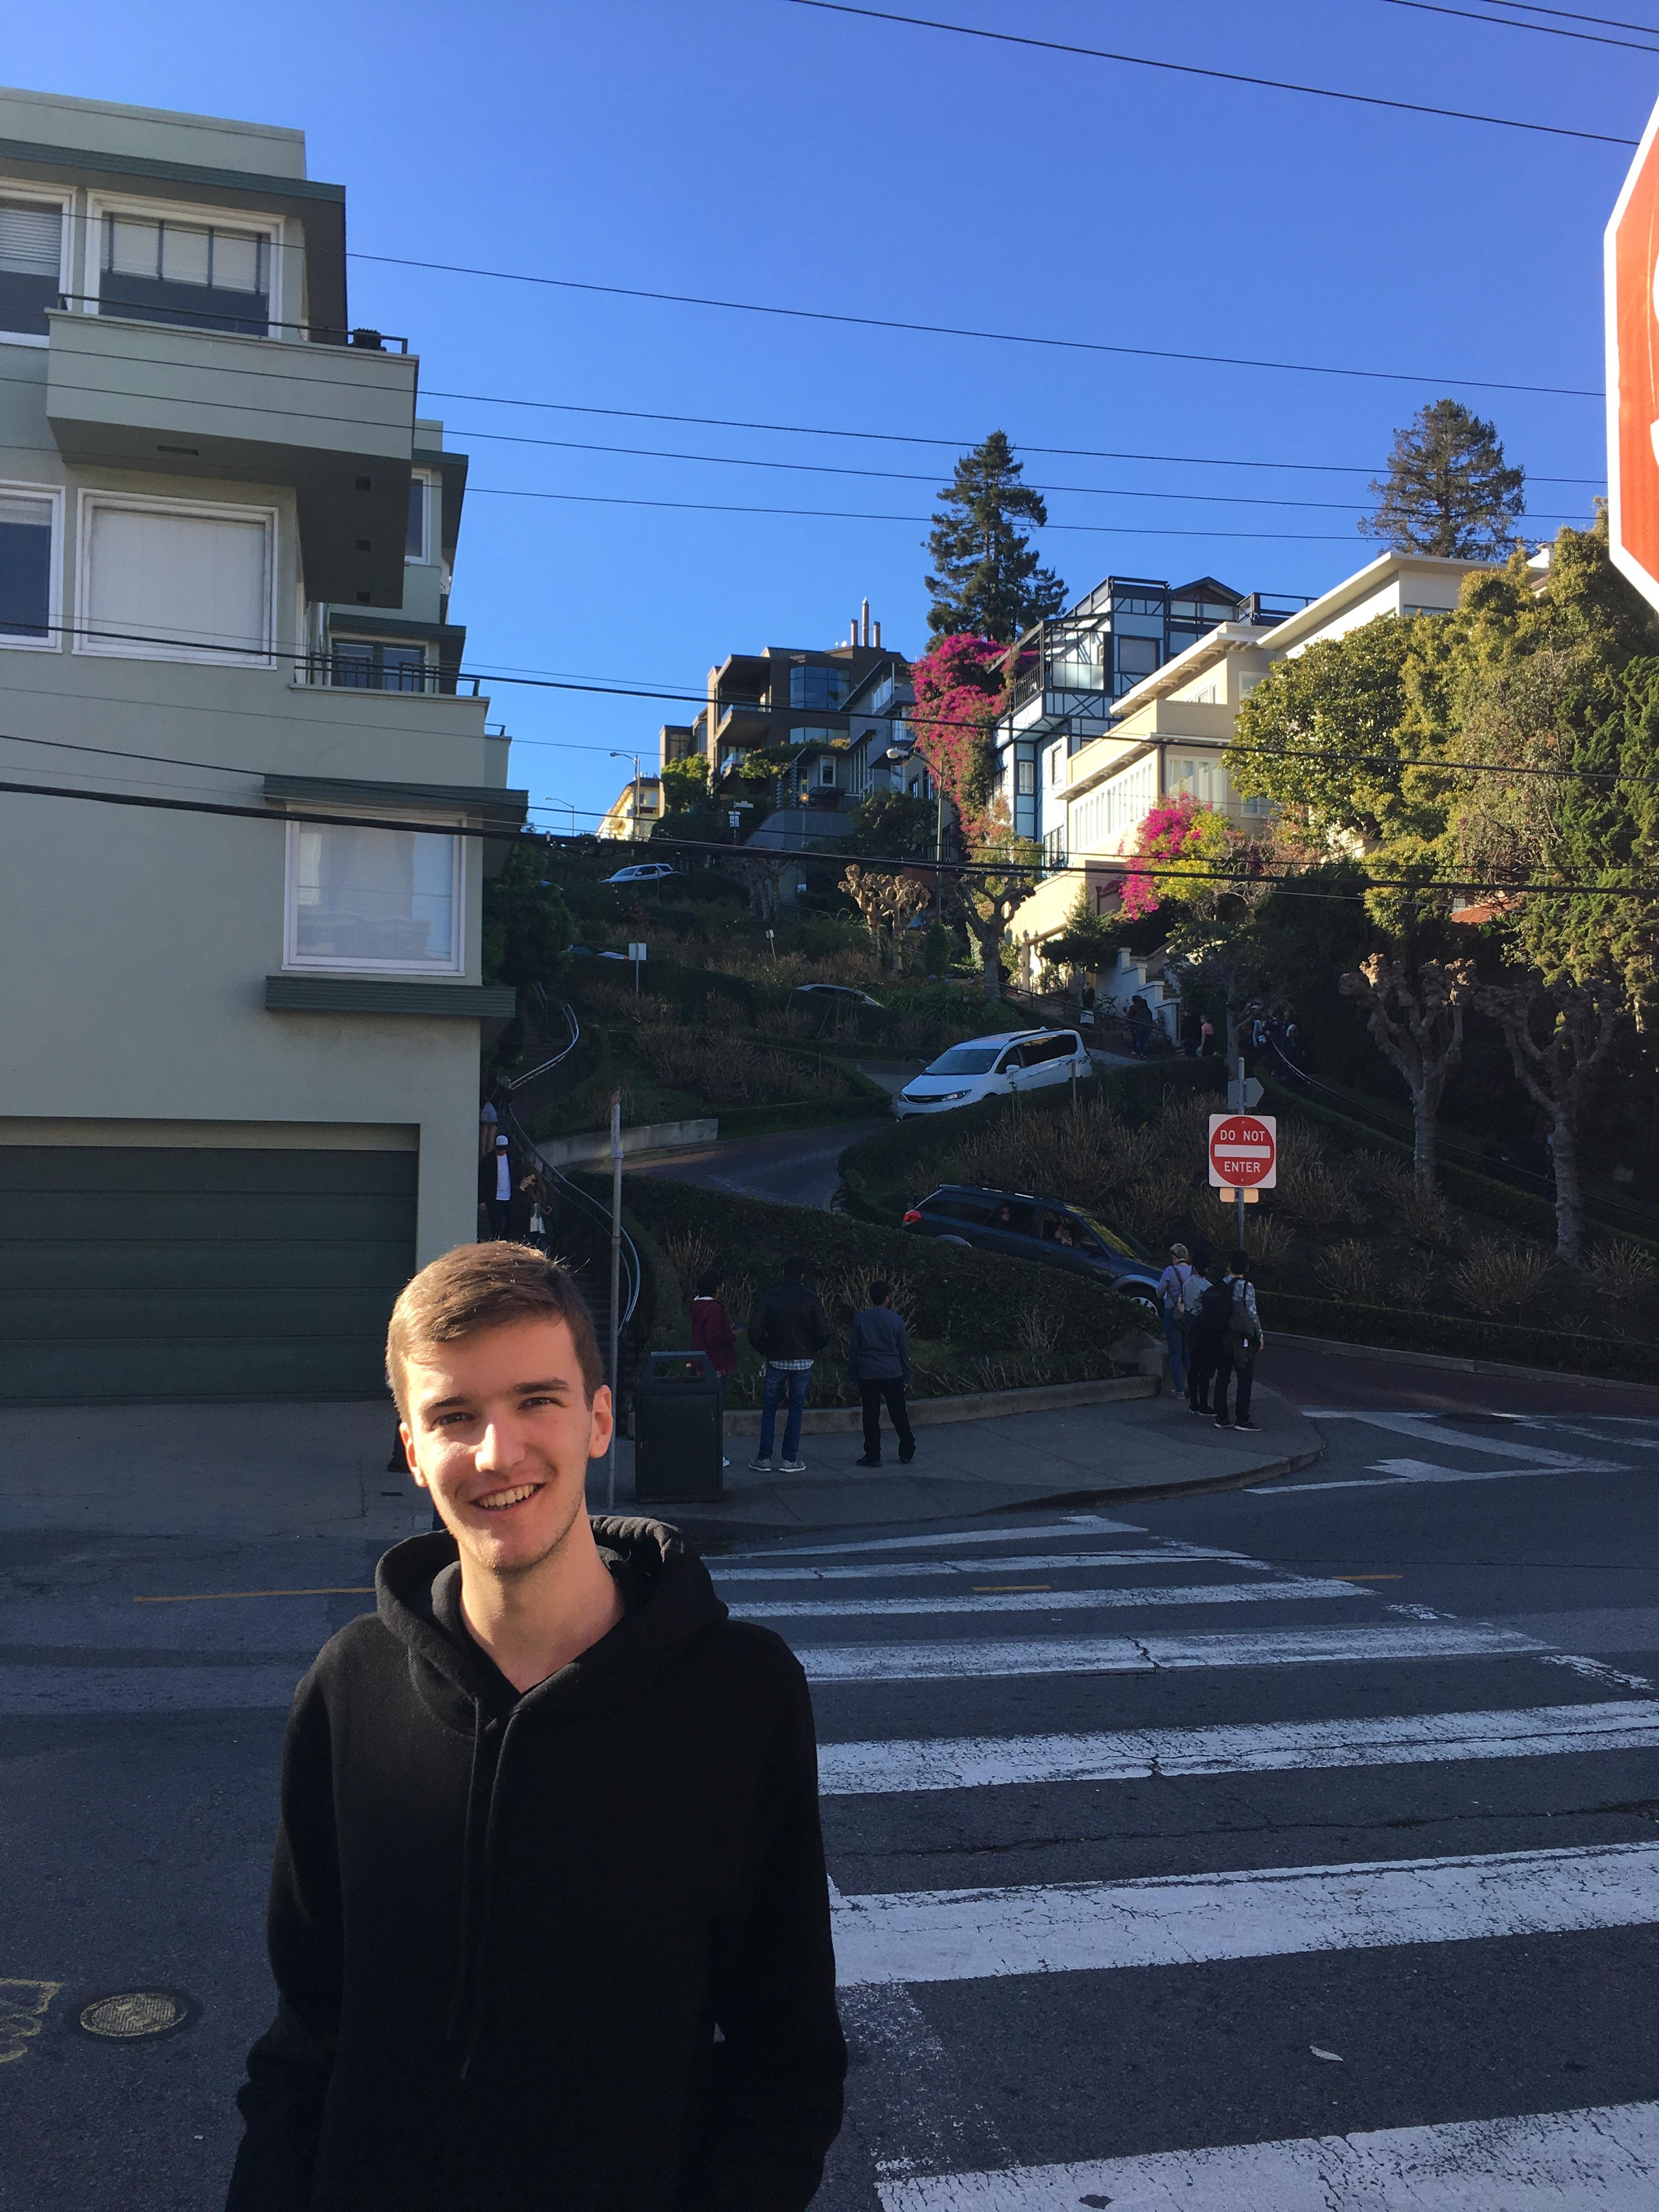 Famous street in San Francisco!